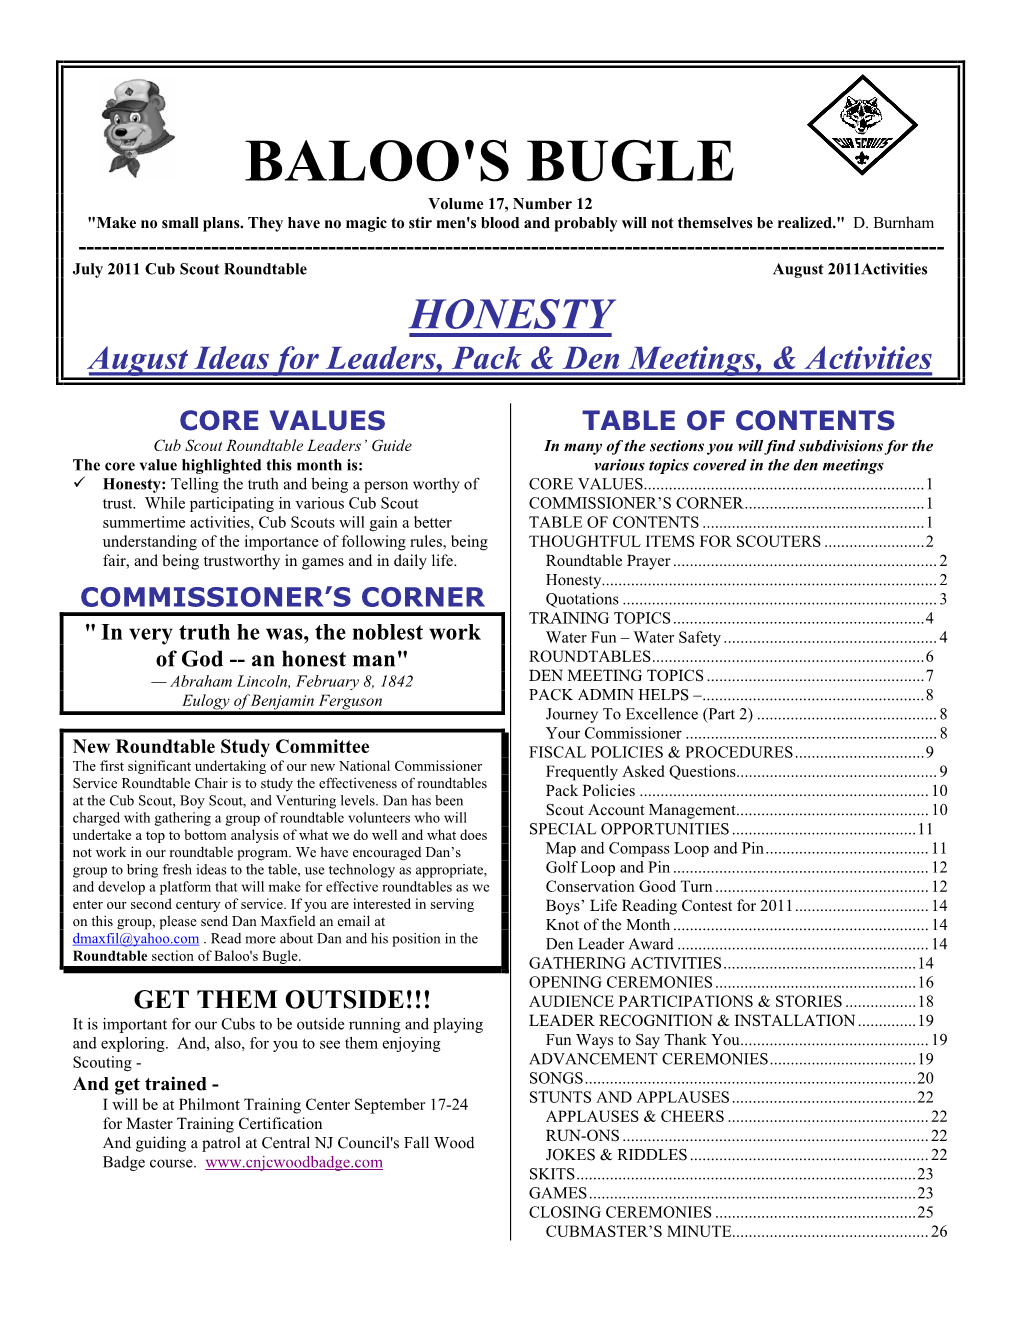 BALOO's BUGLE Volume 17, Number 12 "Make No Small Plans